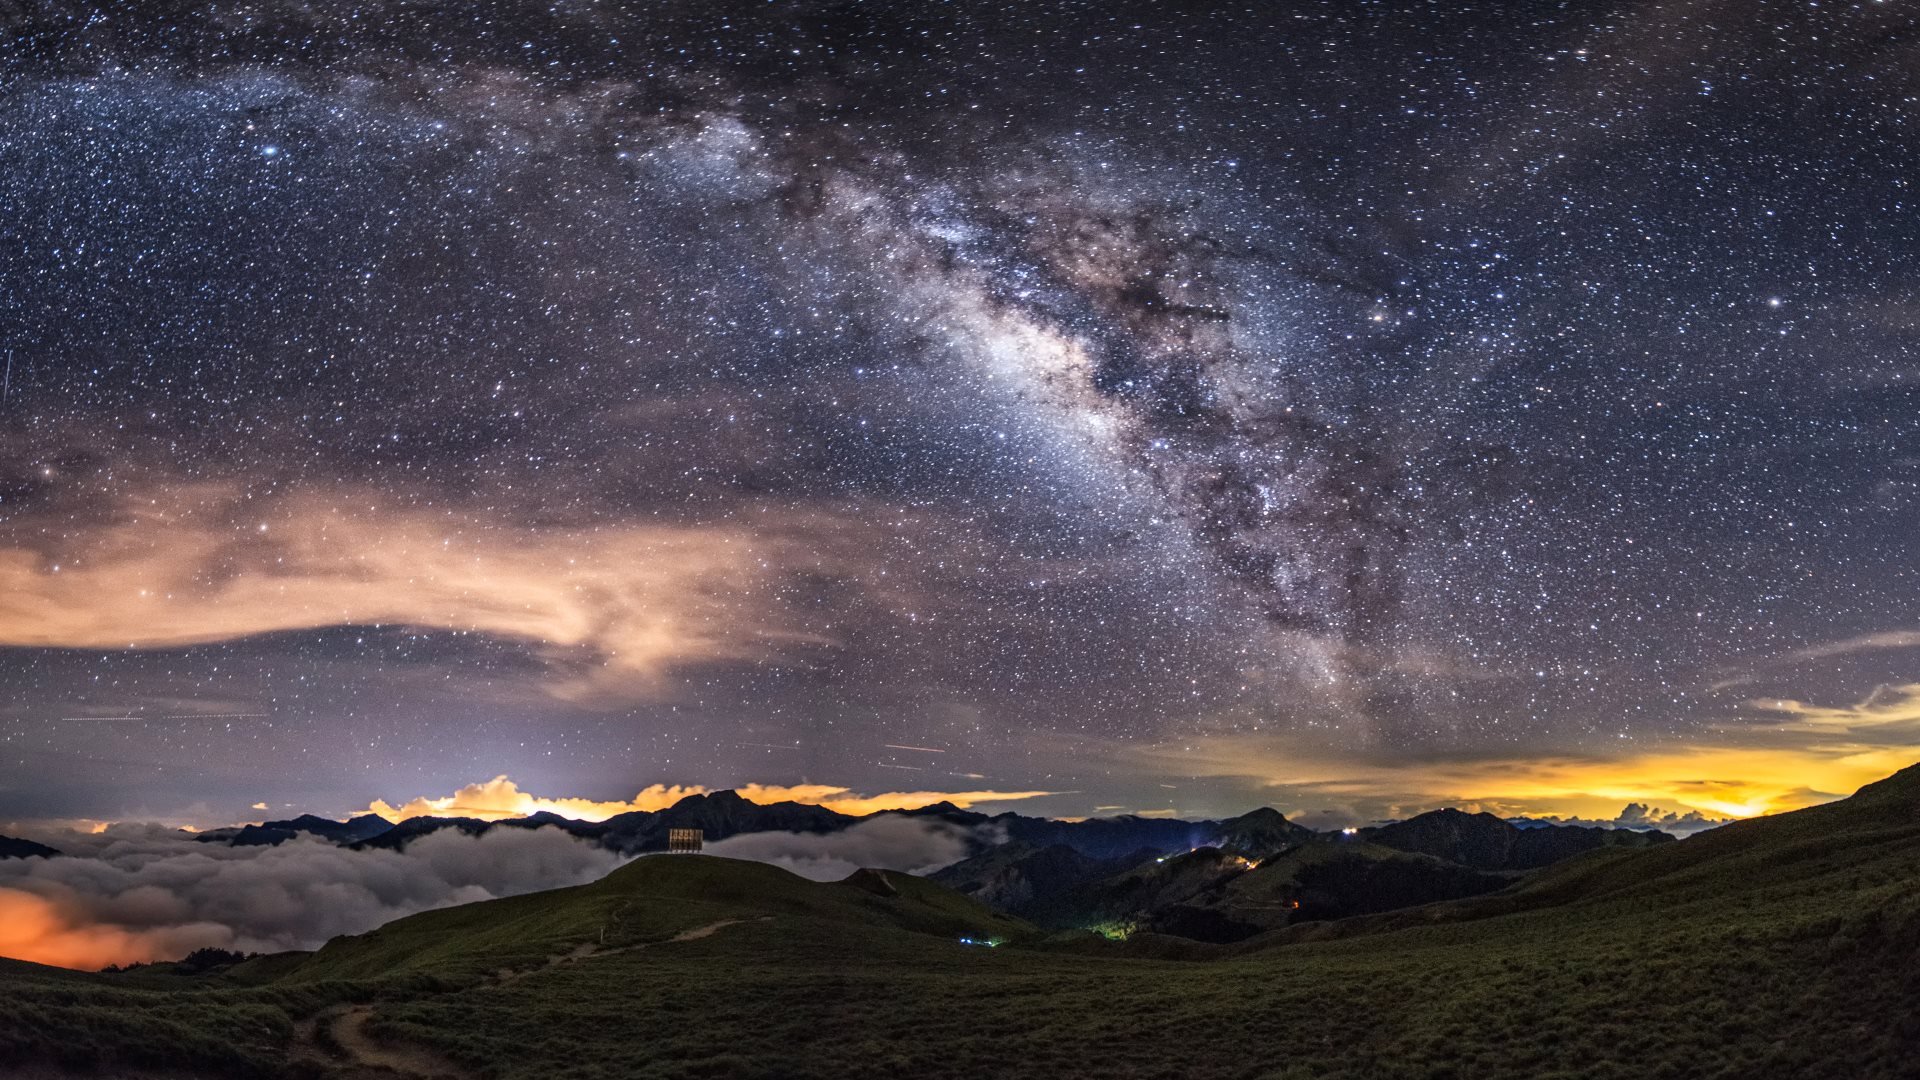 Milky Way on the night sky 1920x1080